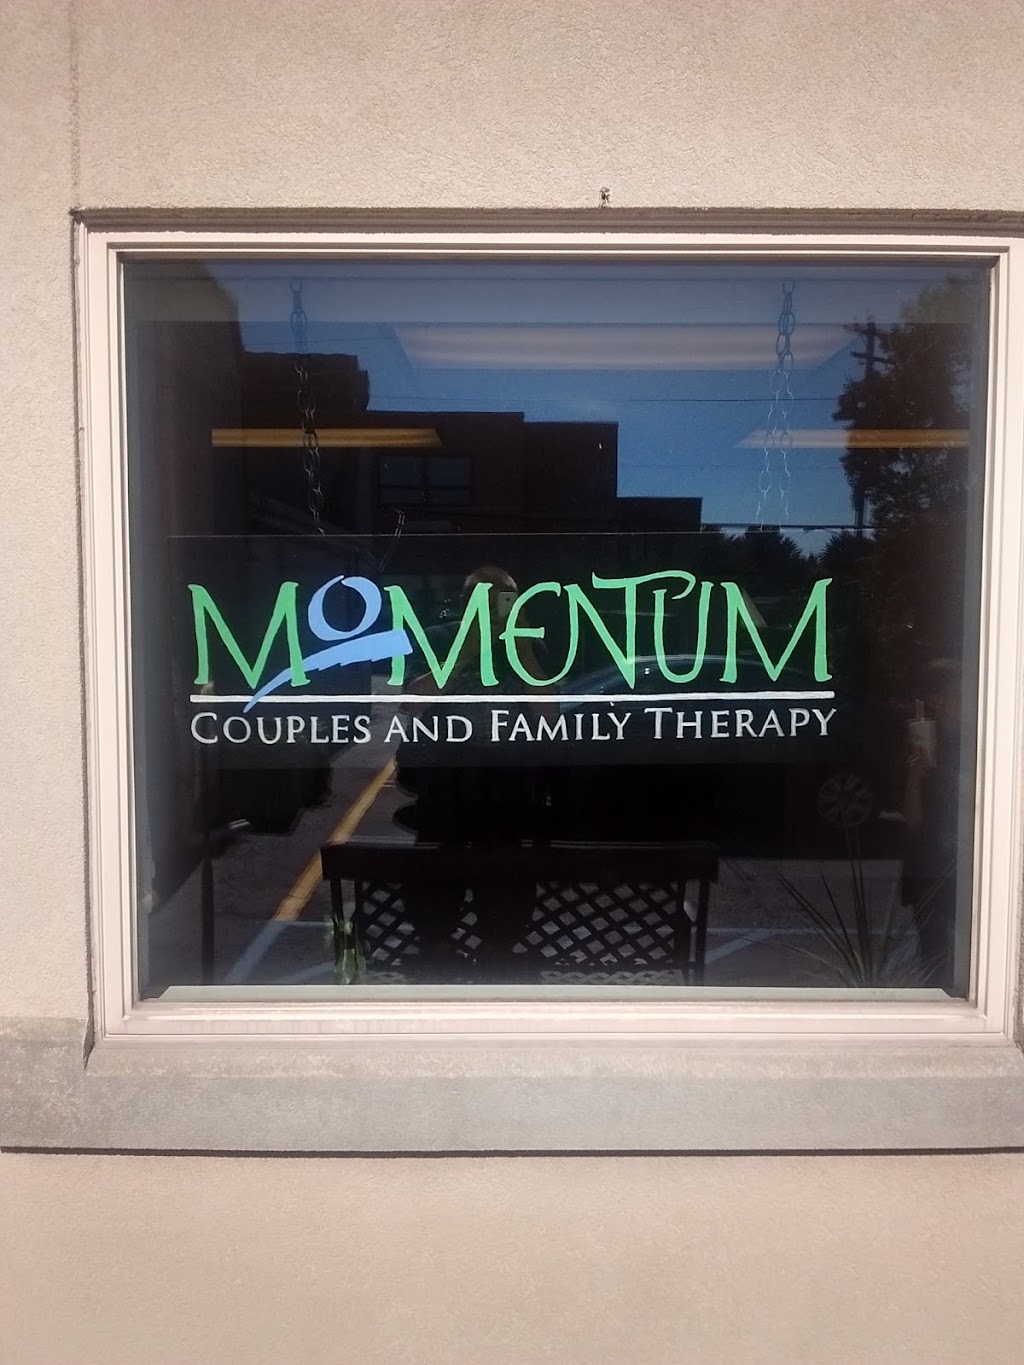 Momentum Couples & Family | 315 Morgantown St, Uniontown, PA 15401, USA | Phone: (724) 557-6598